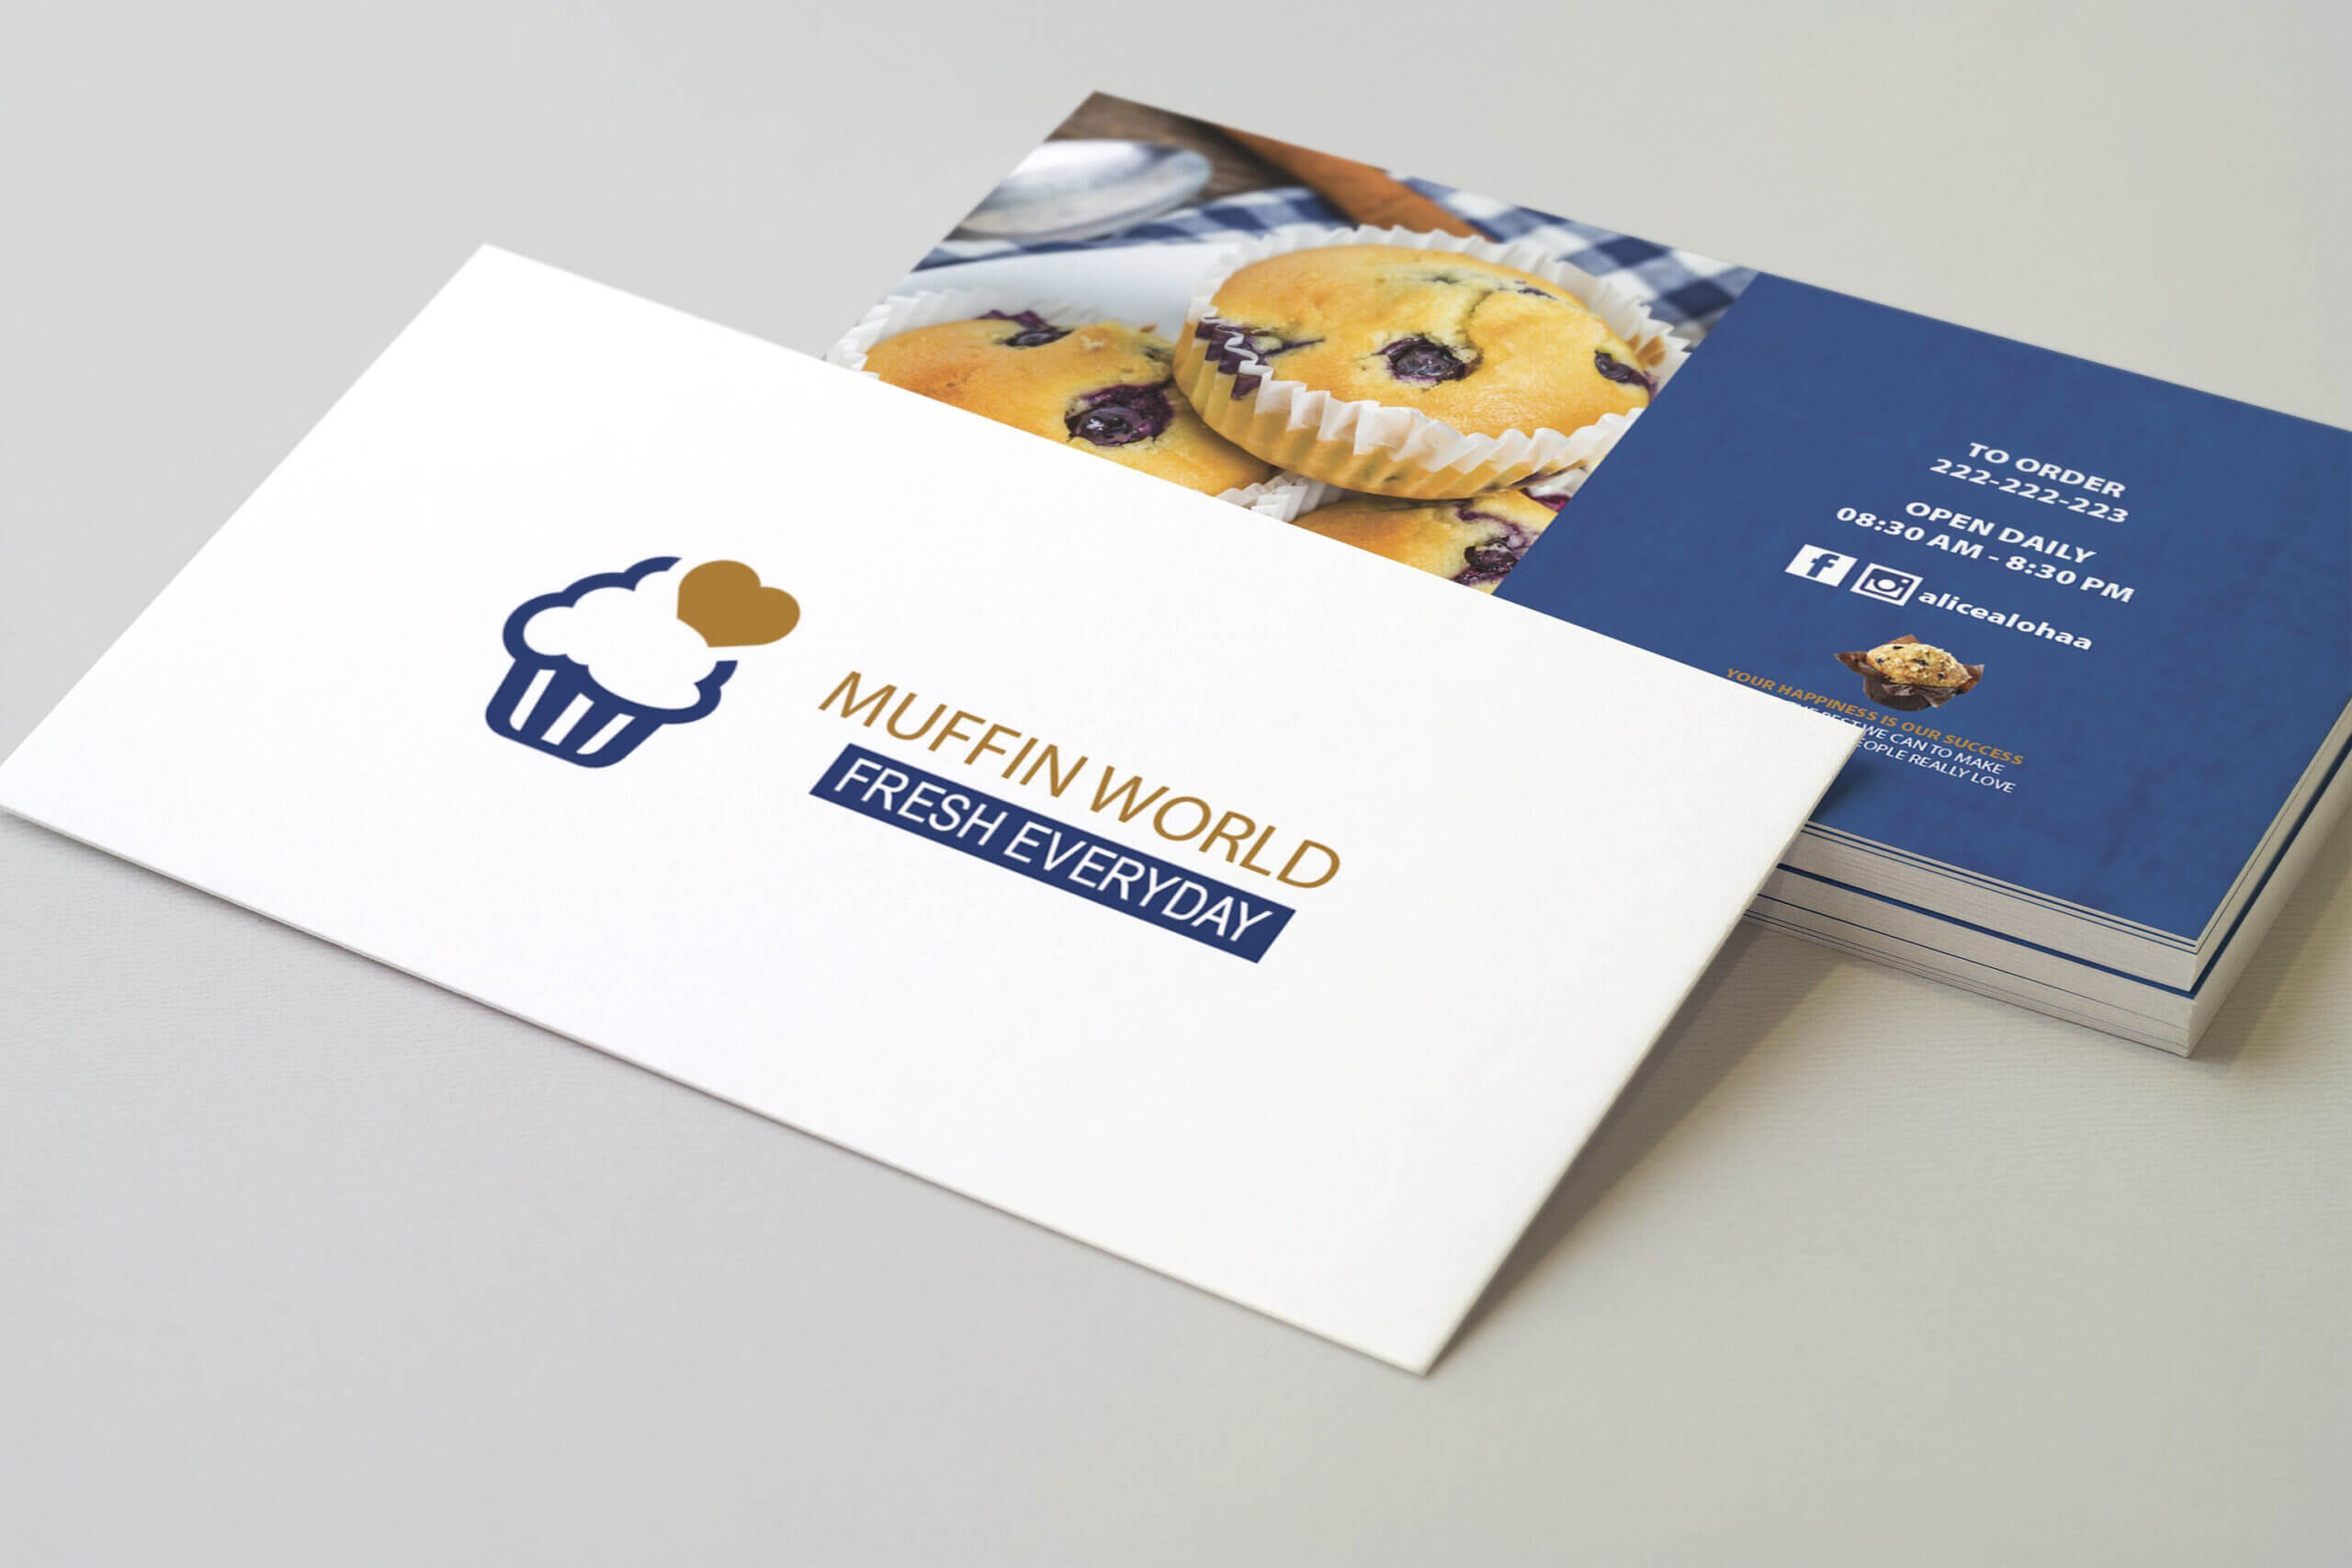 Muffin World Business Card Template #cake#bakers#restaurants With Cake Business Cards Templates Free